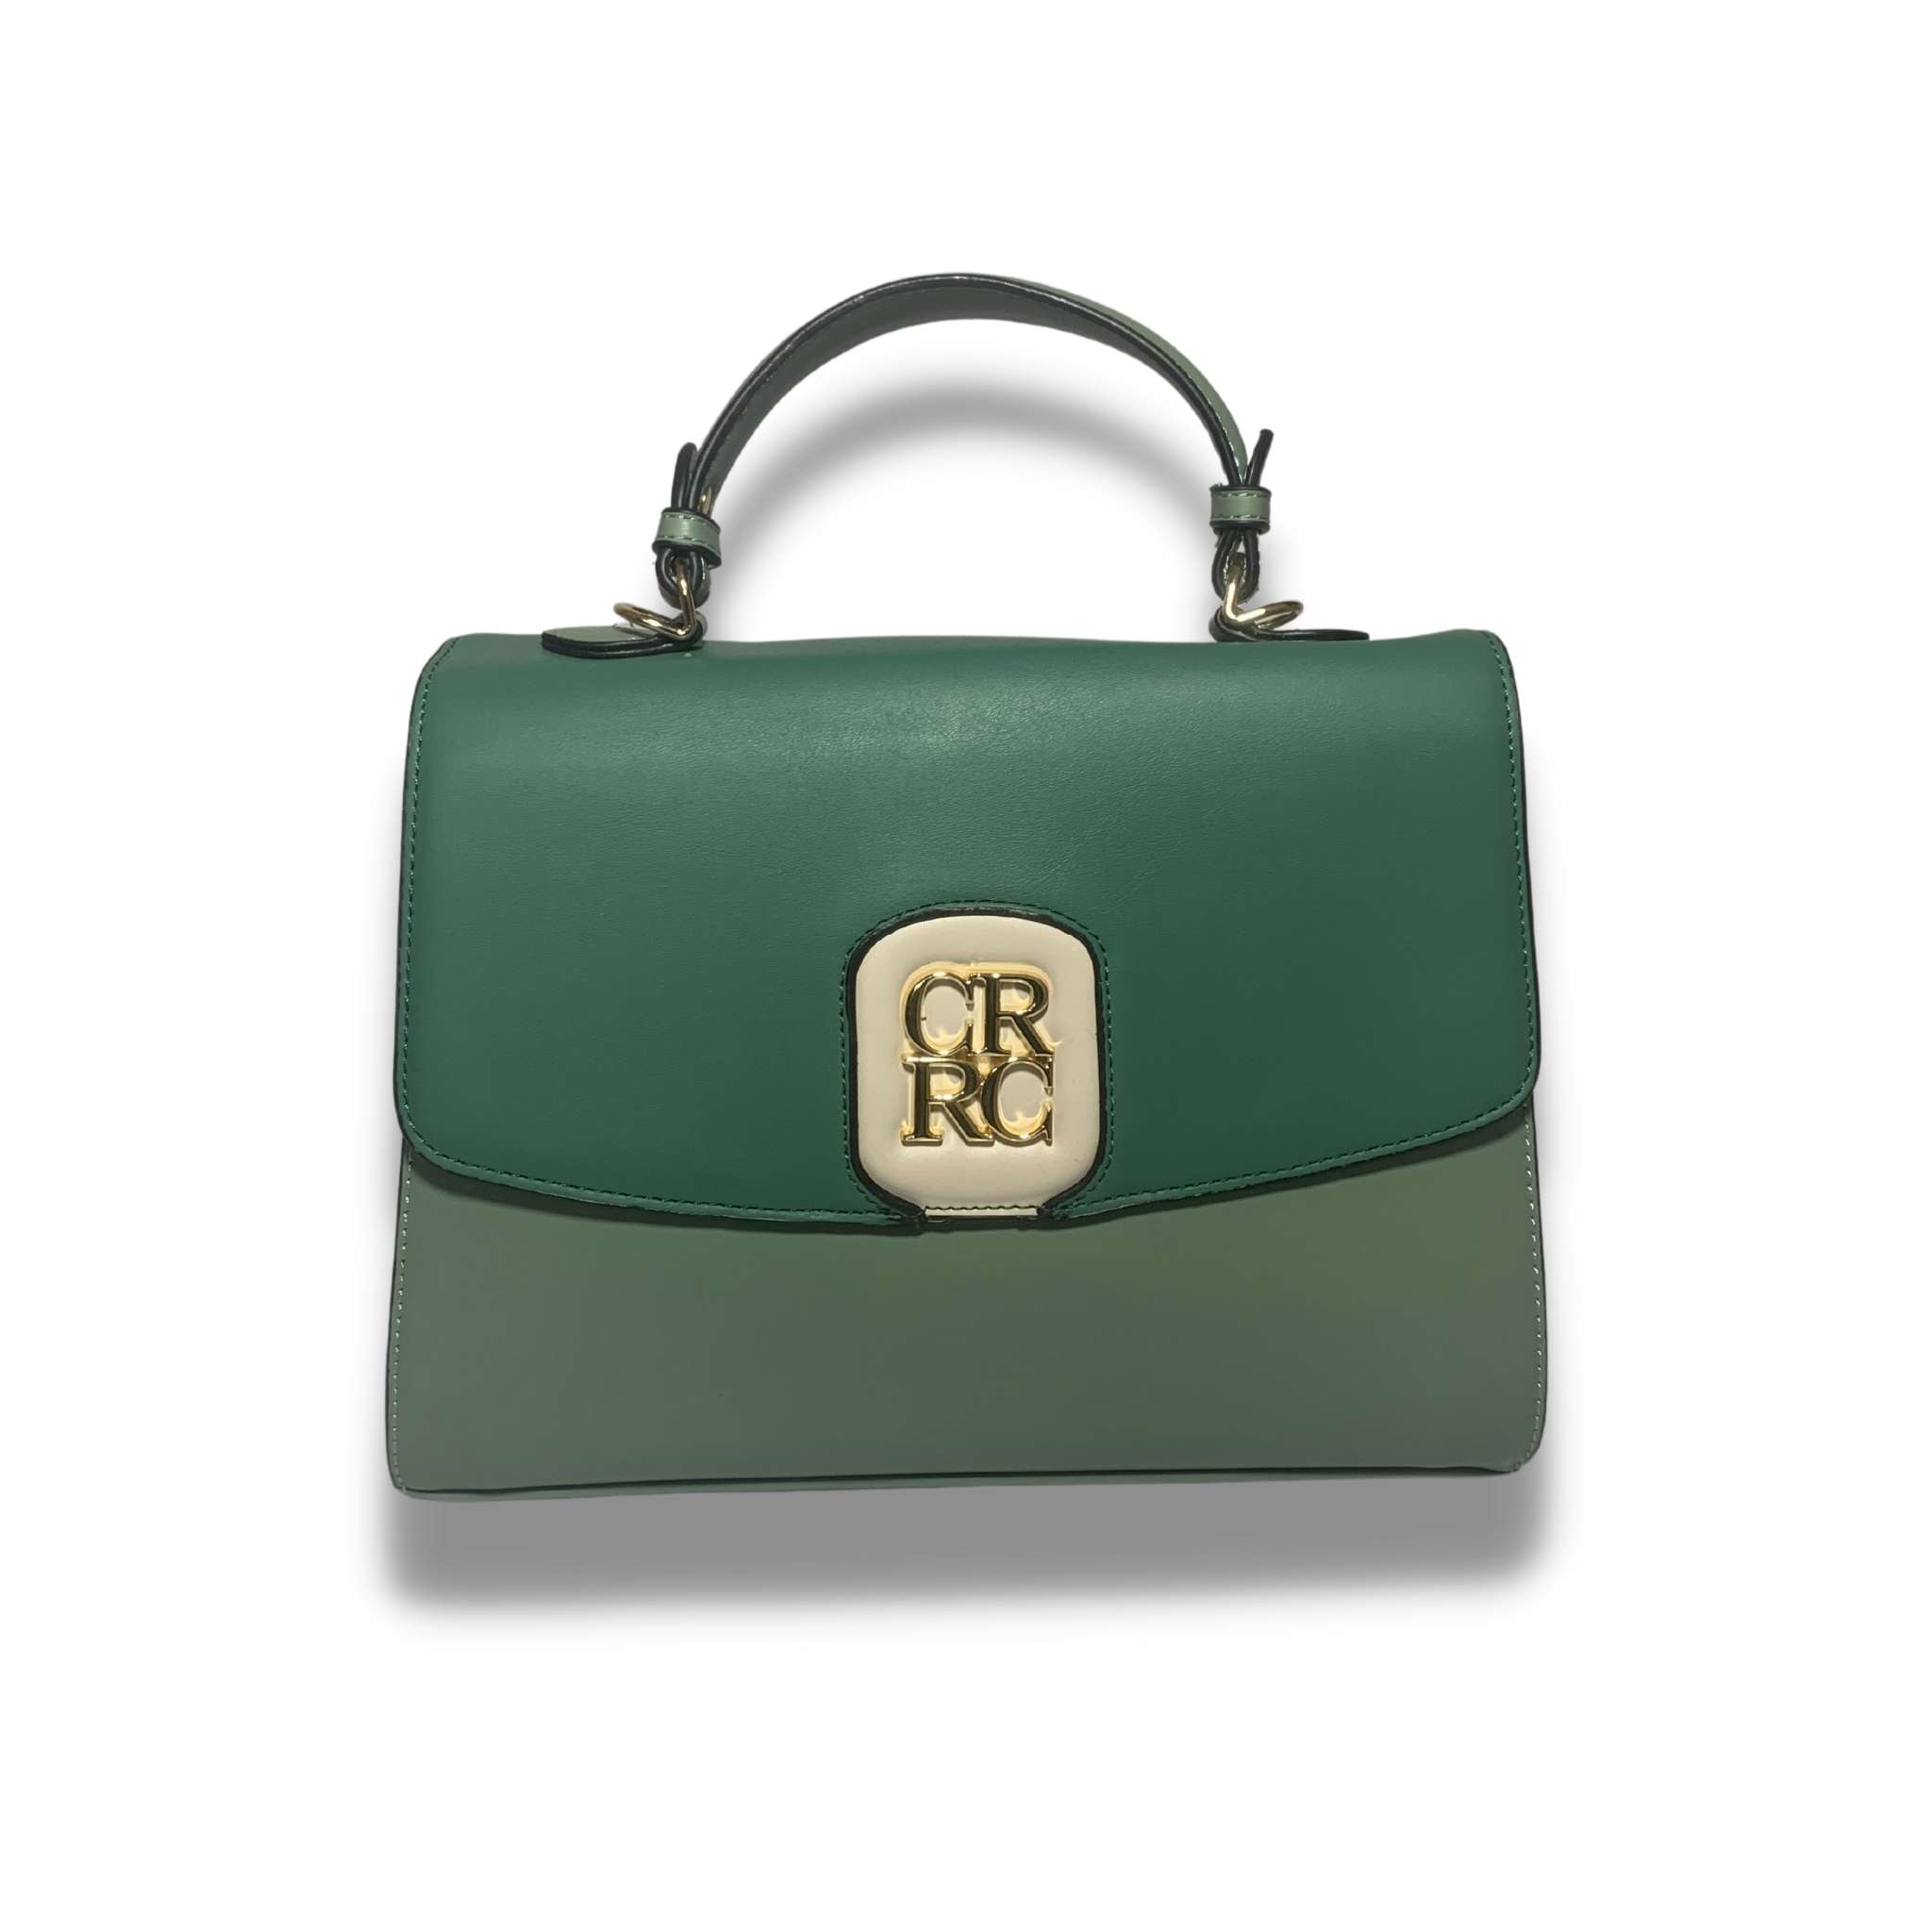 Buy E2O Textured Pattern Brown Satchel Handbag for Women online